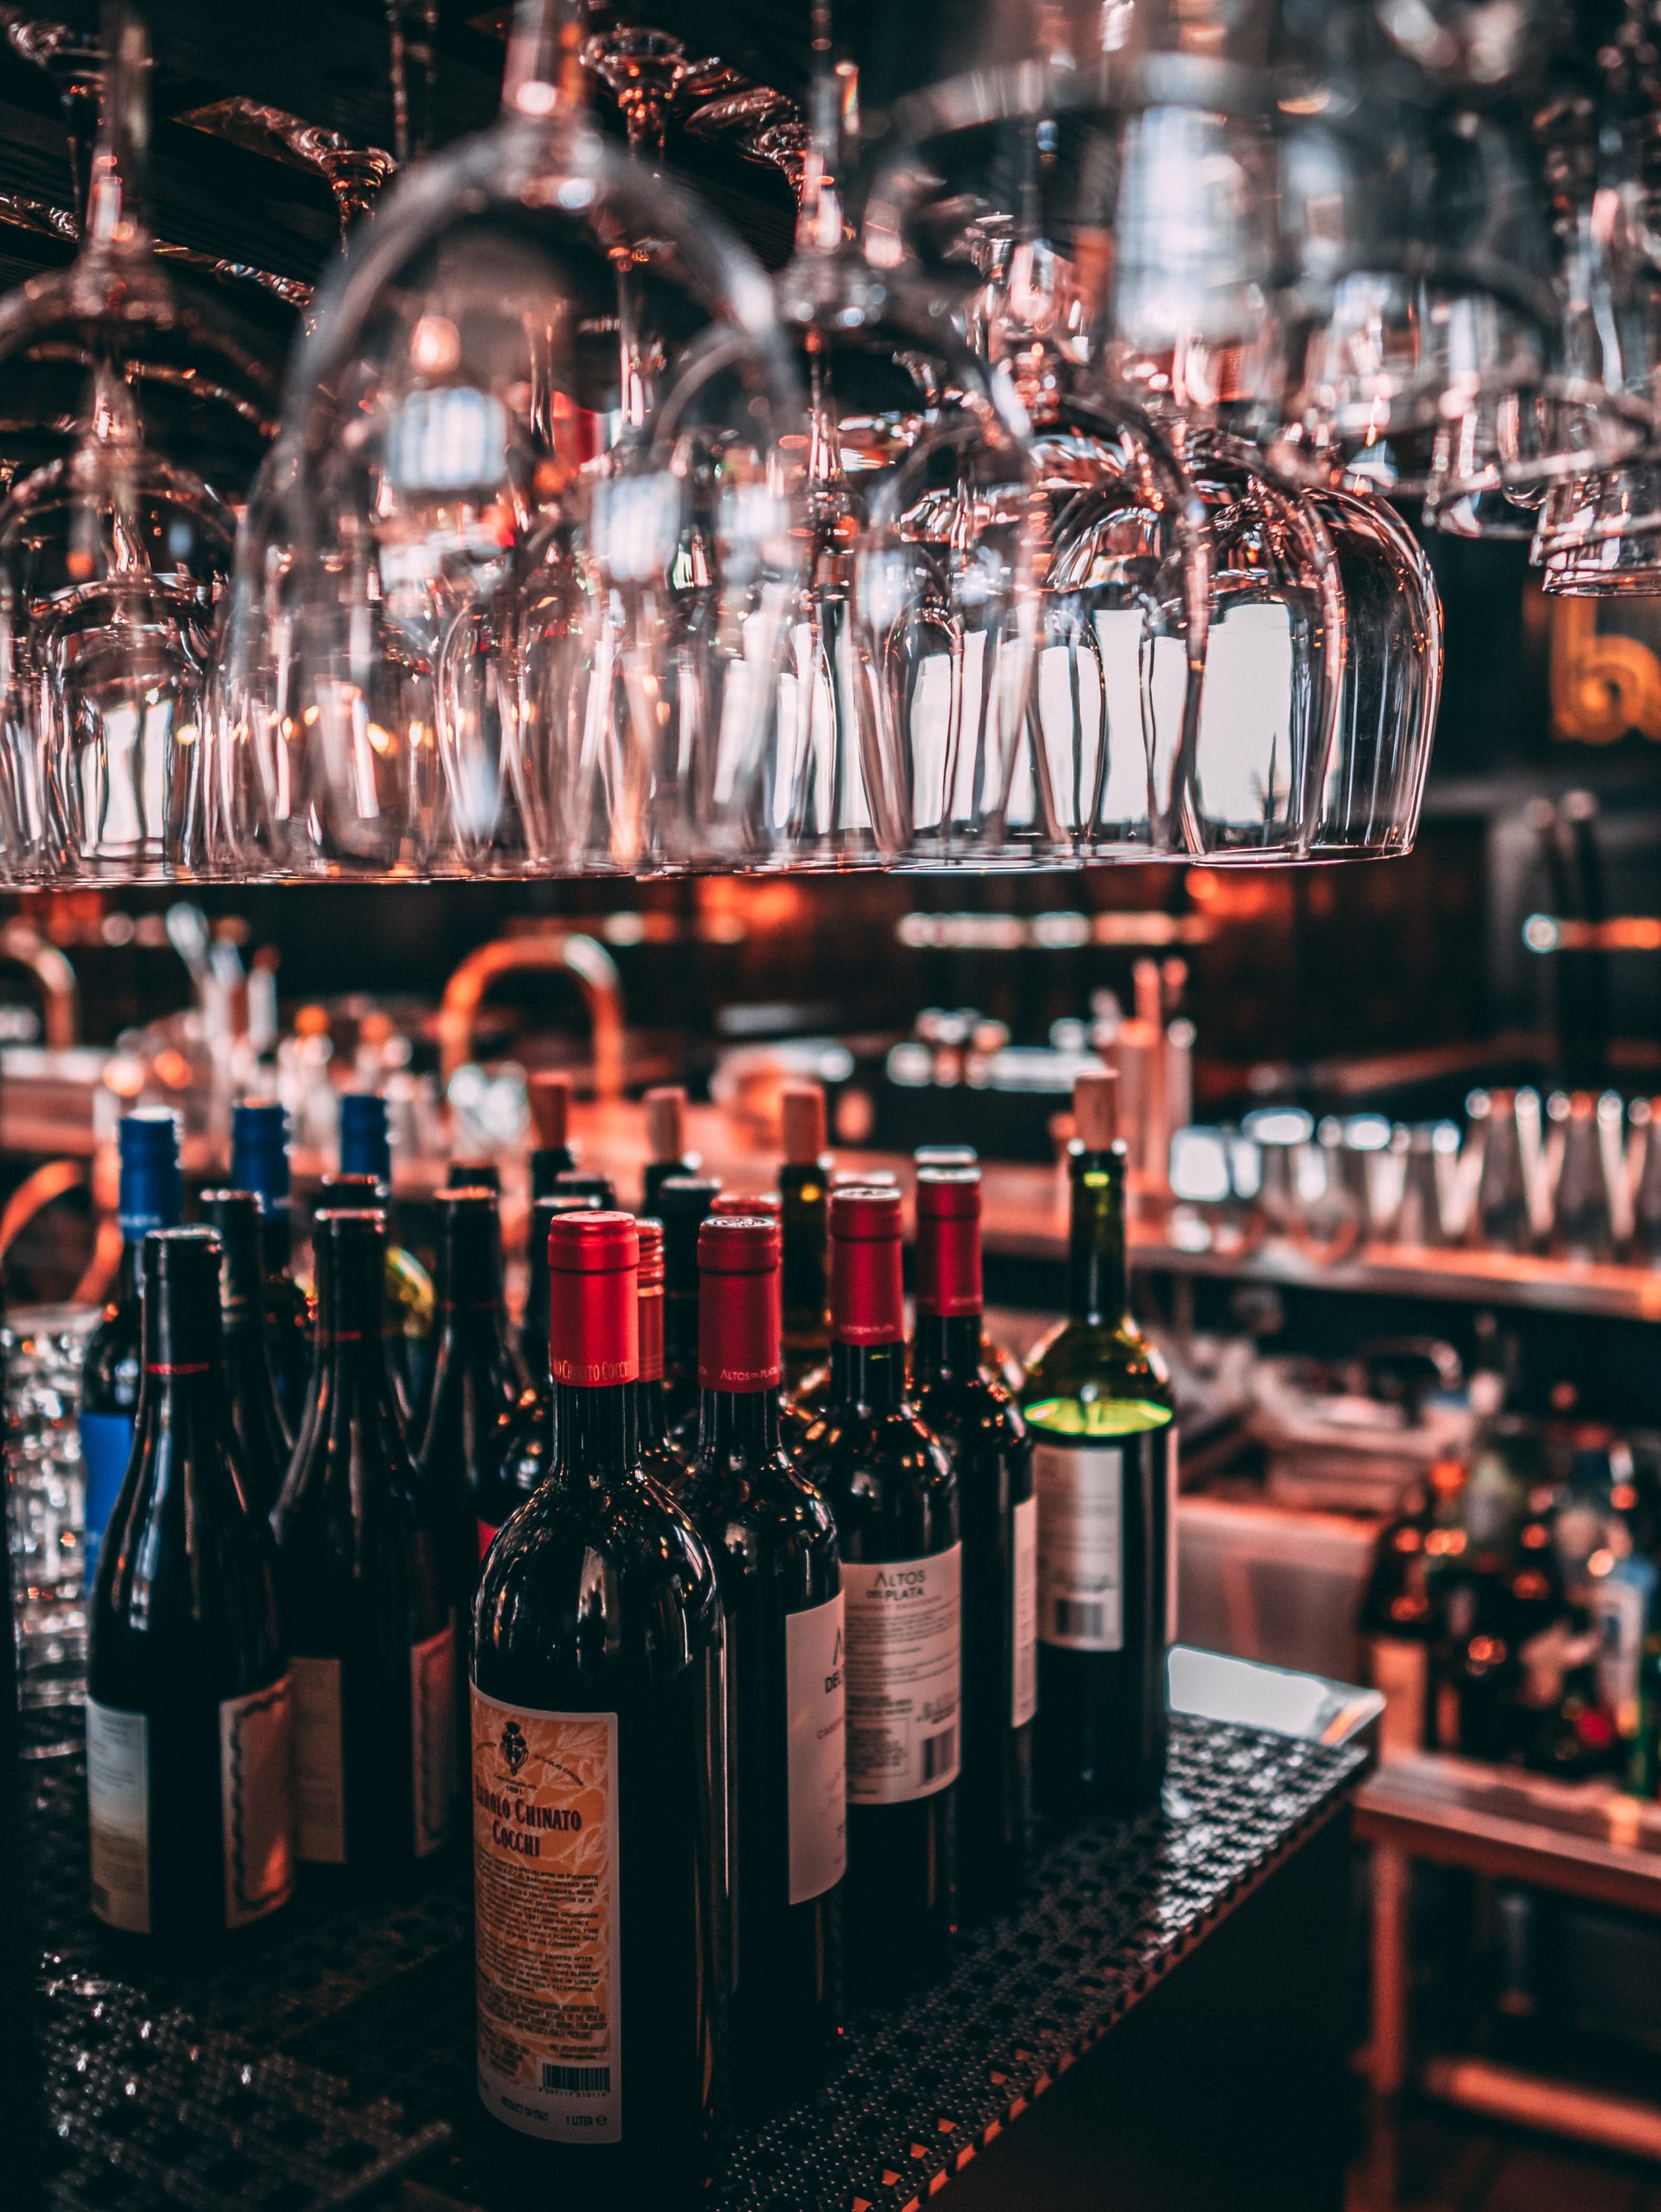 Wine bottles on a bar